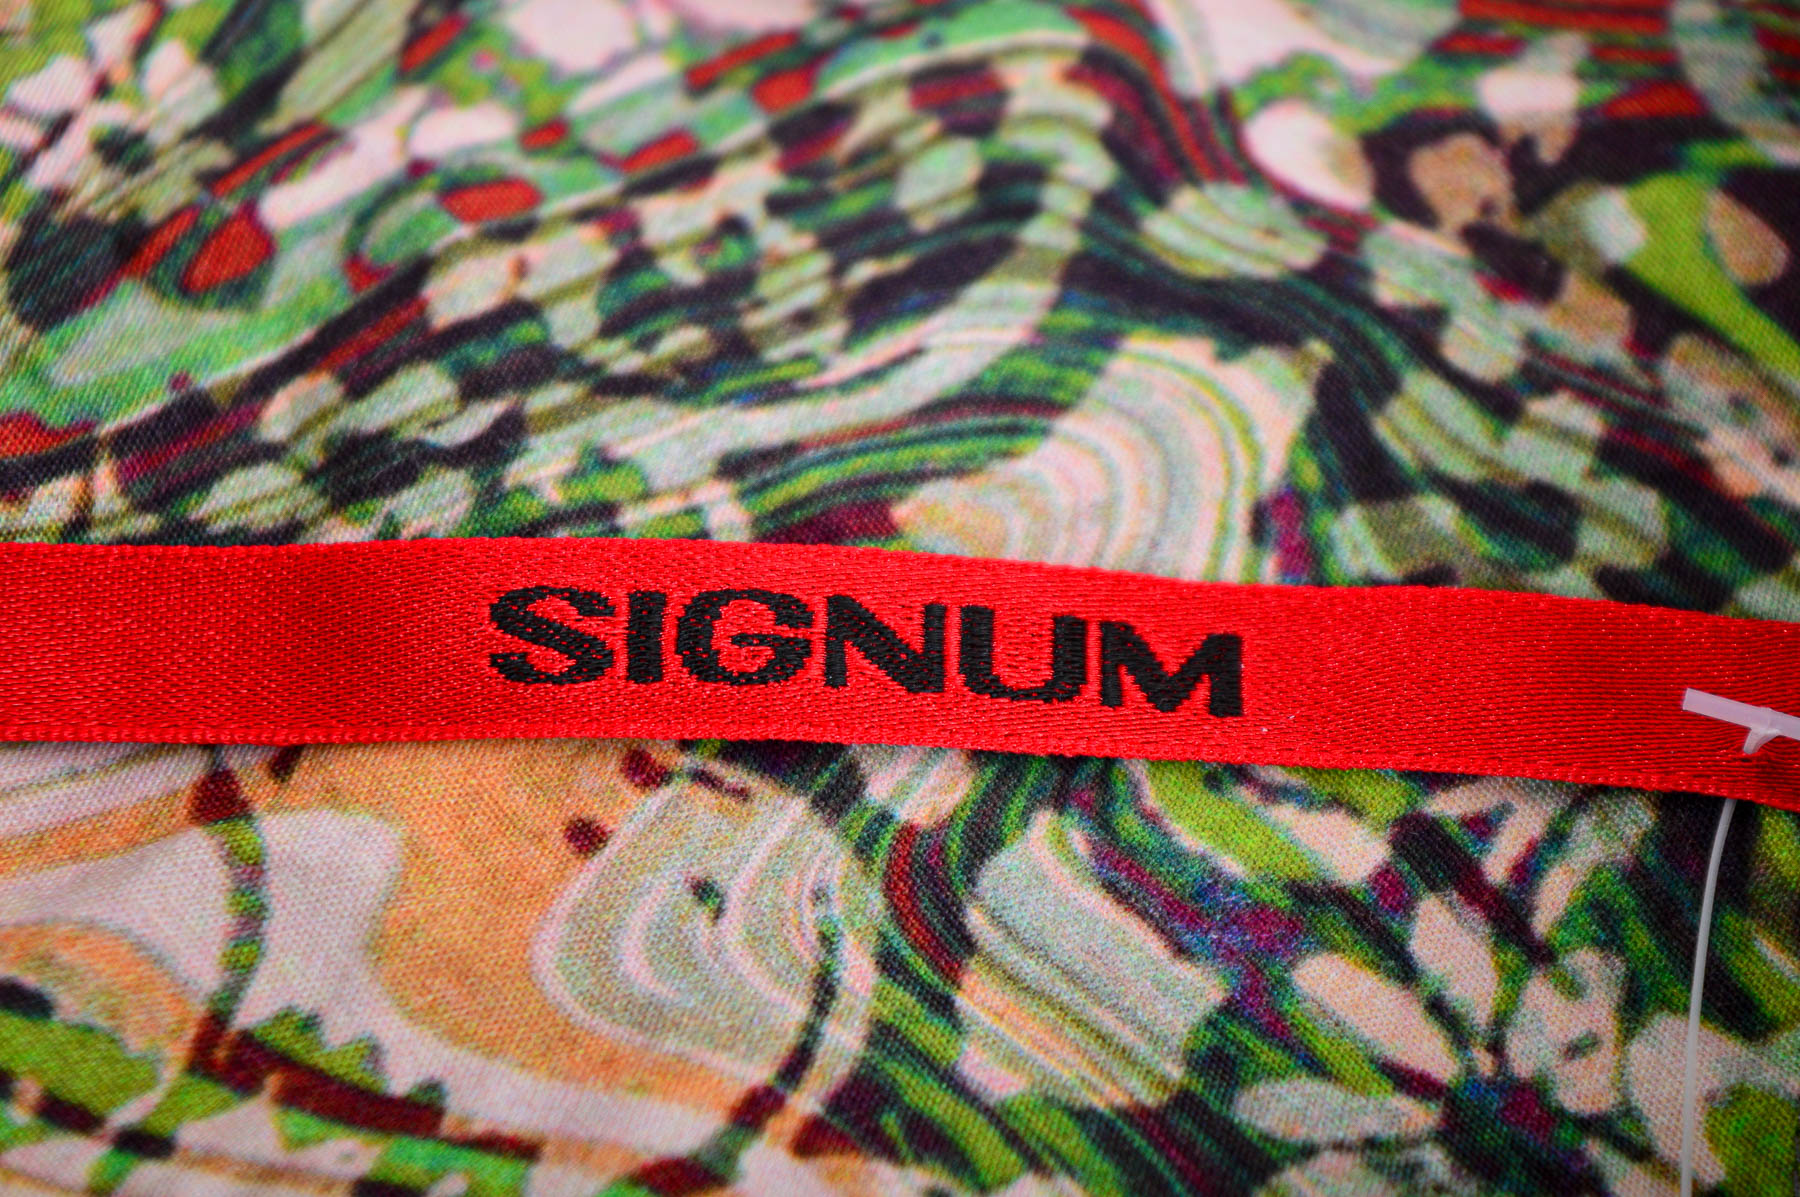 Men's shirt - Signum - 2